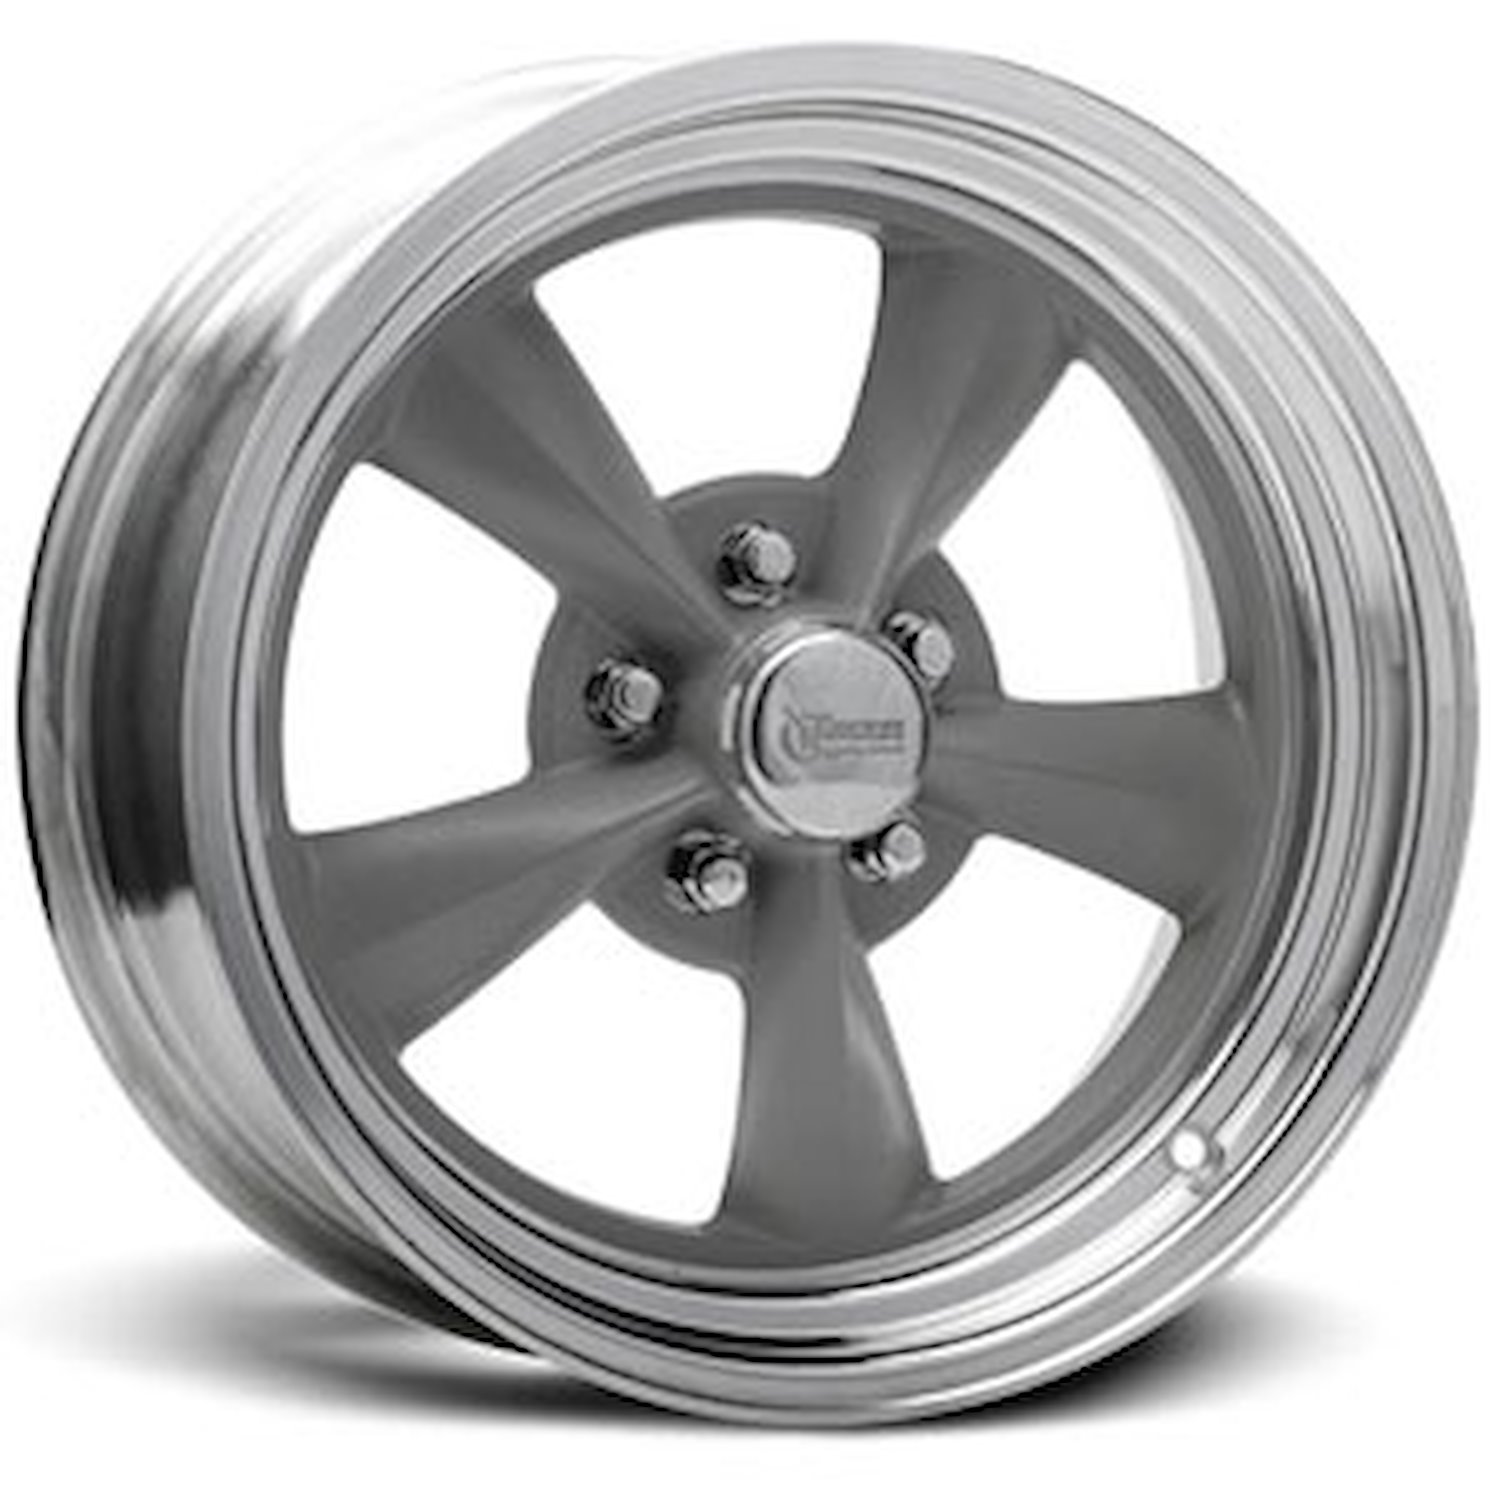 Fuel Wheel - Gray Size: 15" x 10"